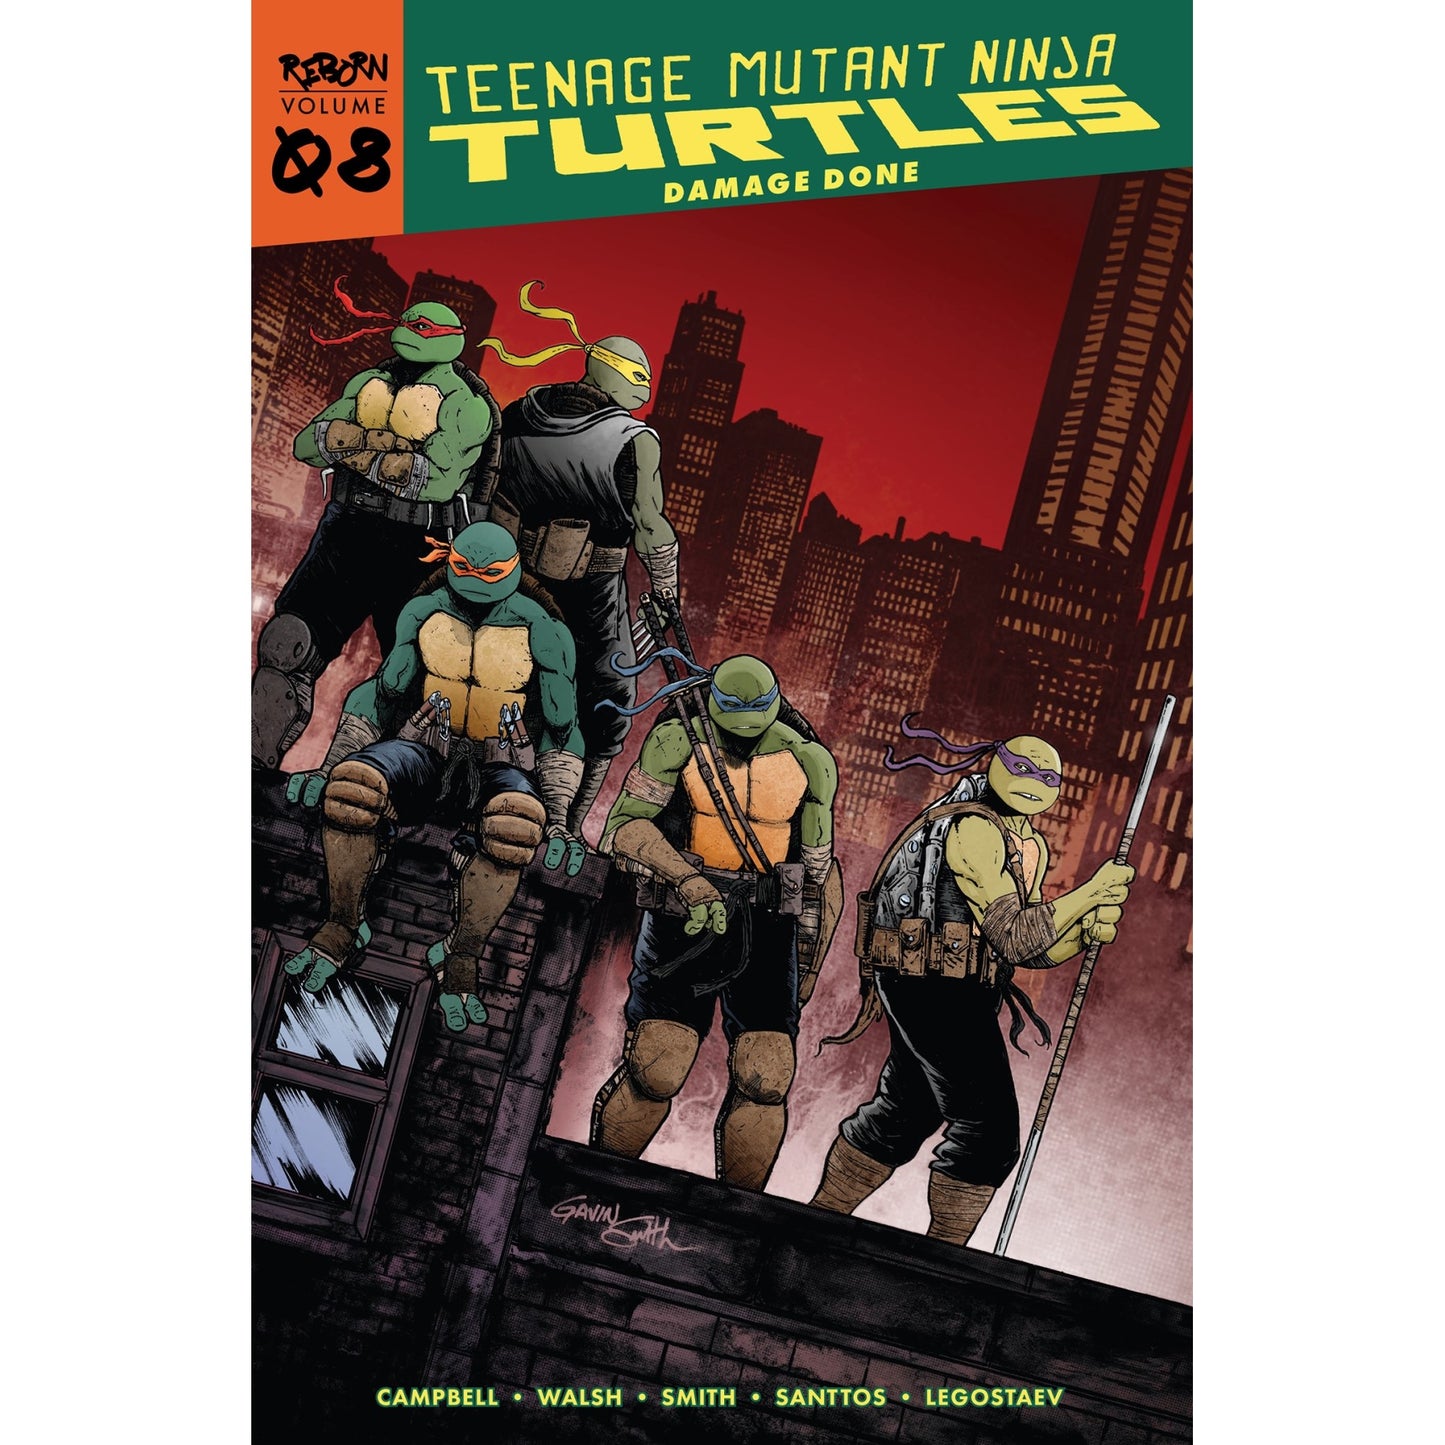 Teenage Mutant Ninja Turtles: Reborn Vol. 8 - Damage Done